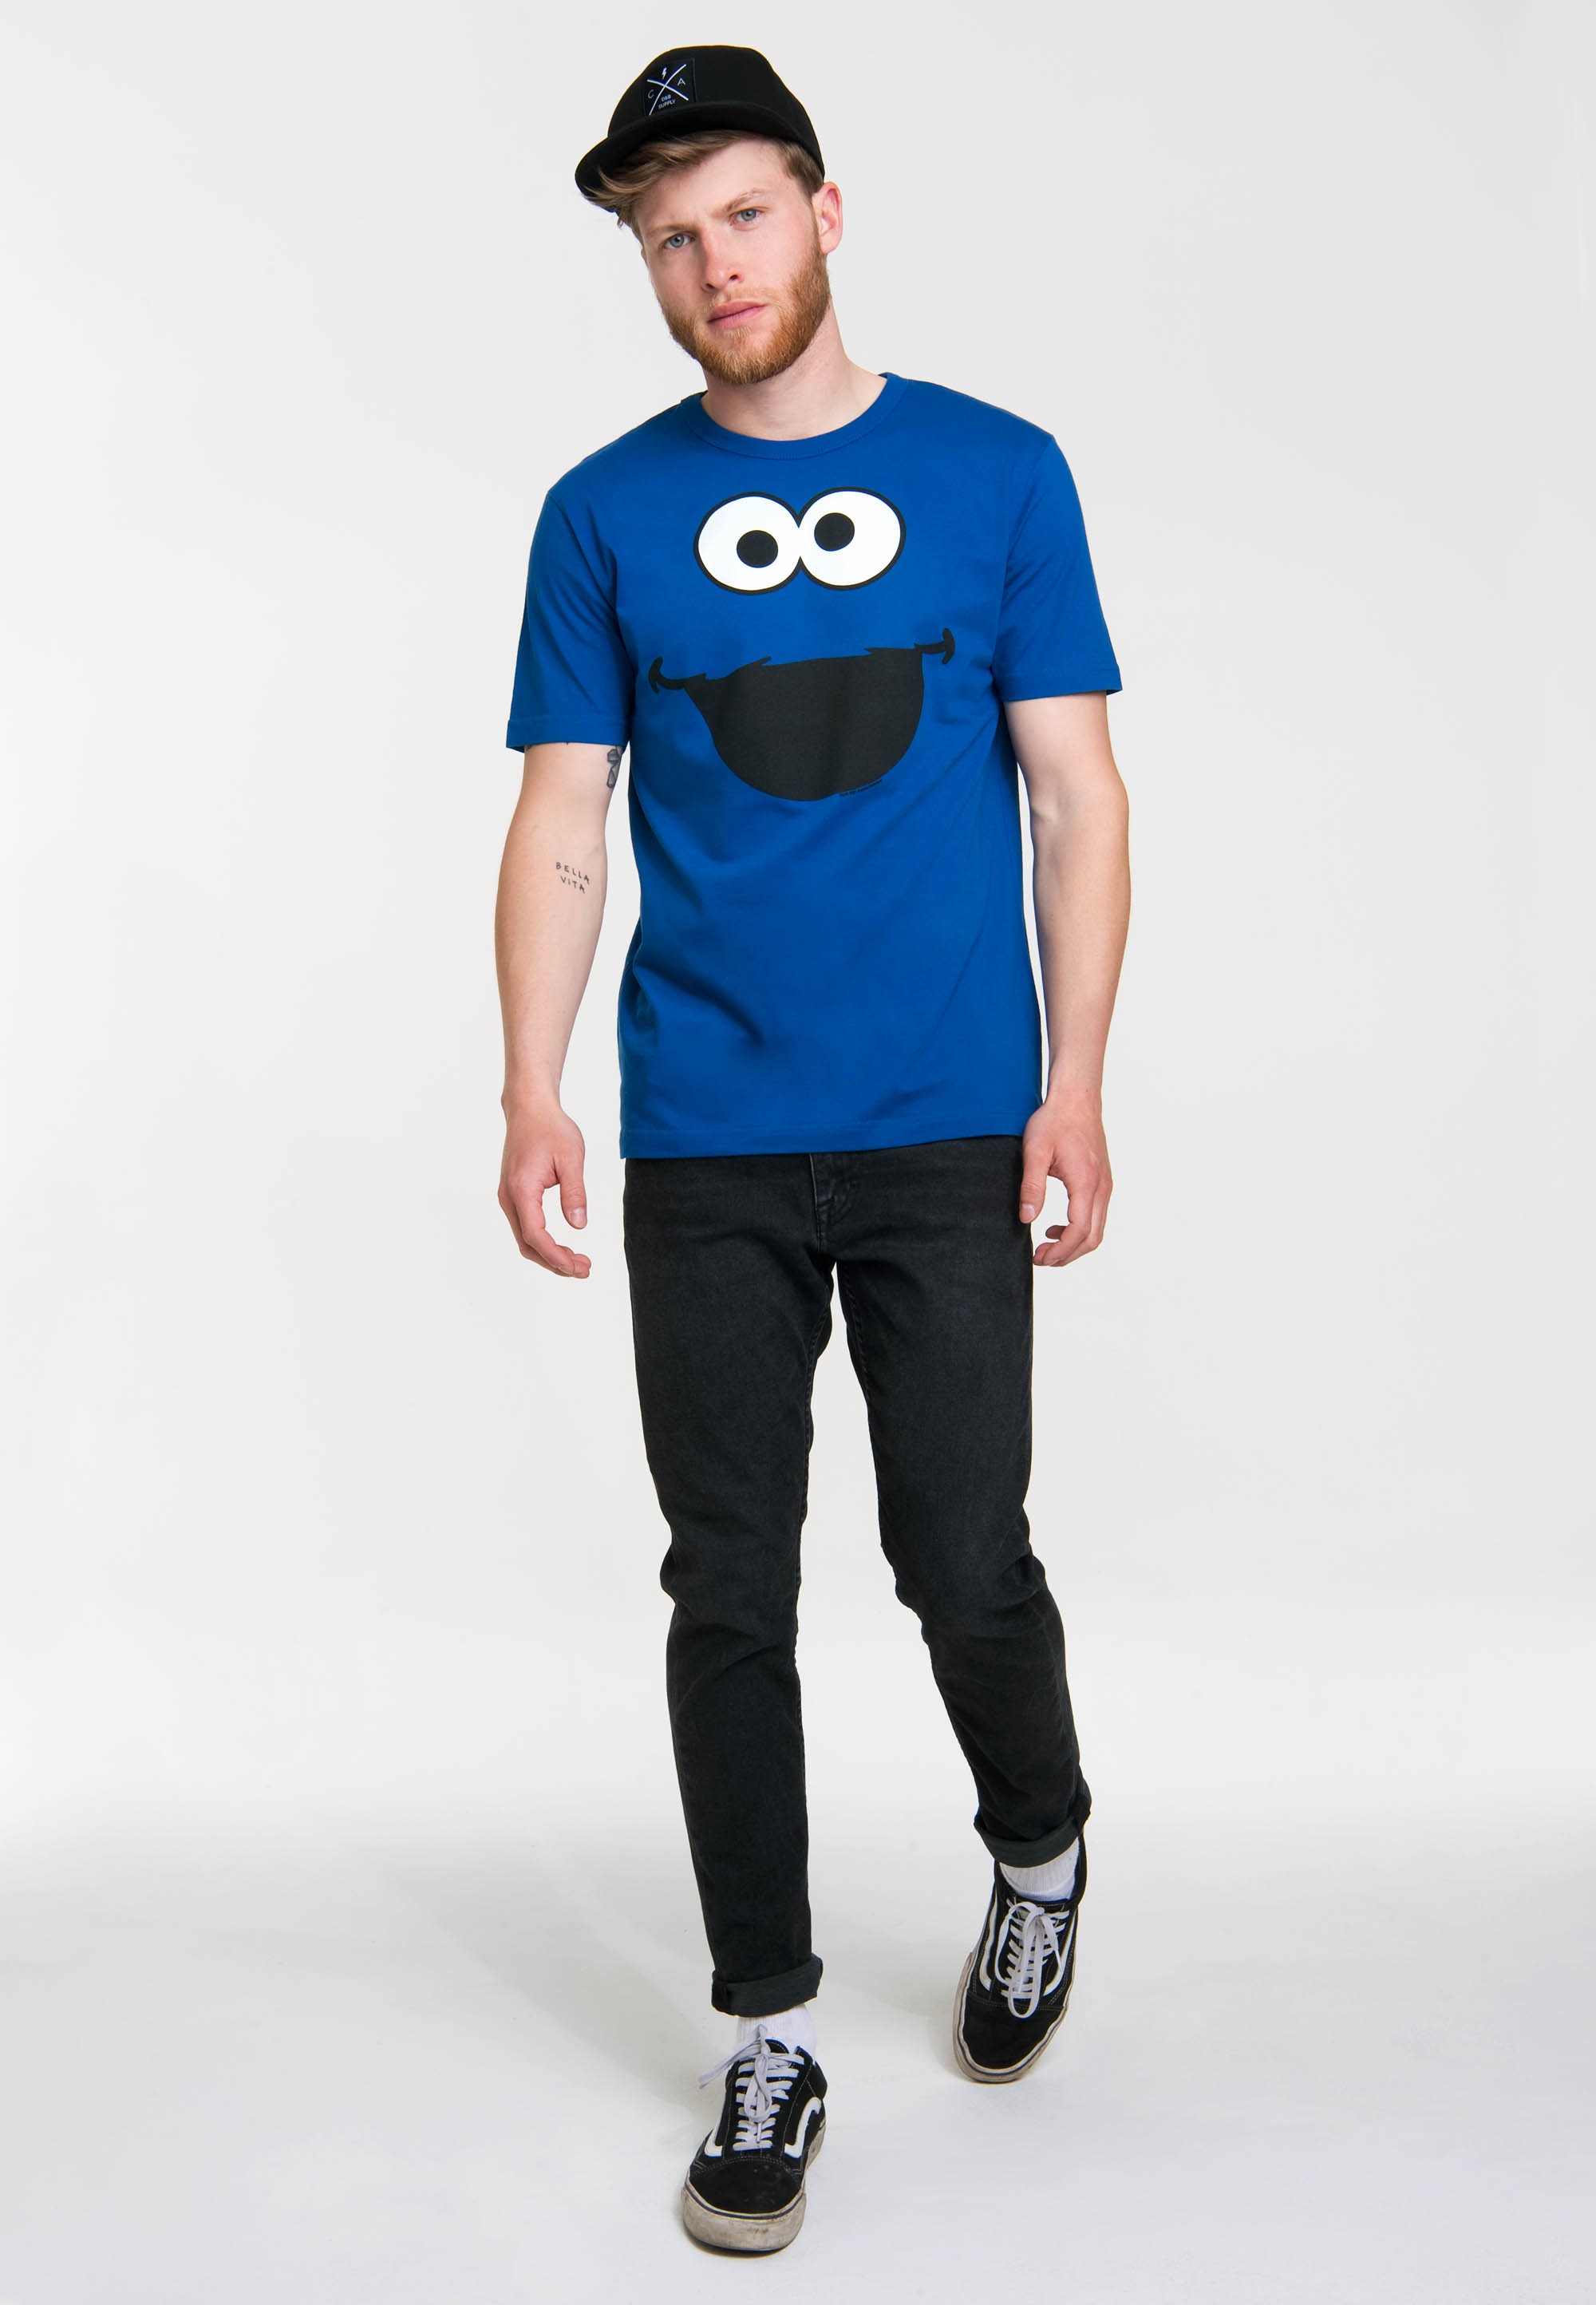 LOGOSHIRT T-Shirt »Krümelmonster - Cookie Monster«, mit süßem Print